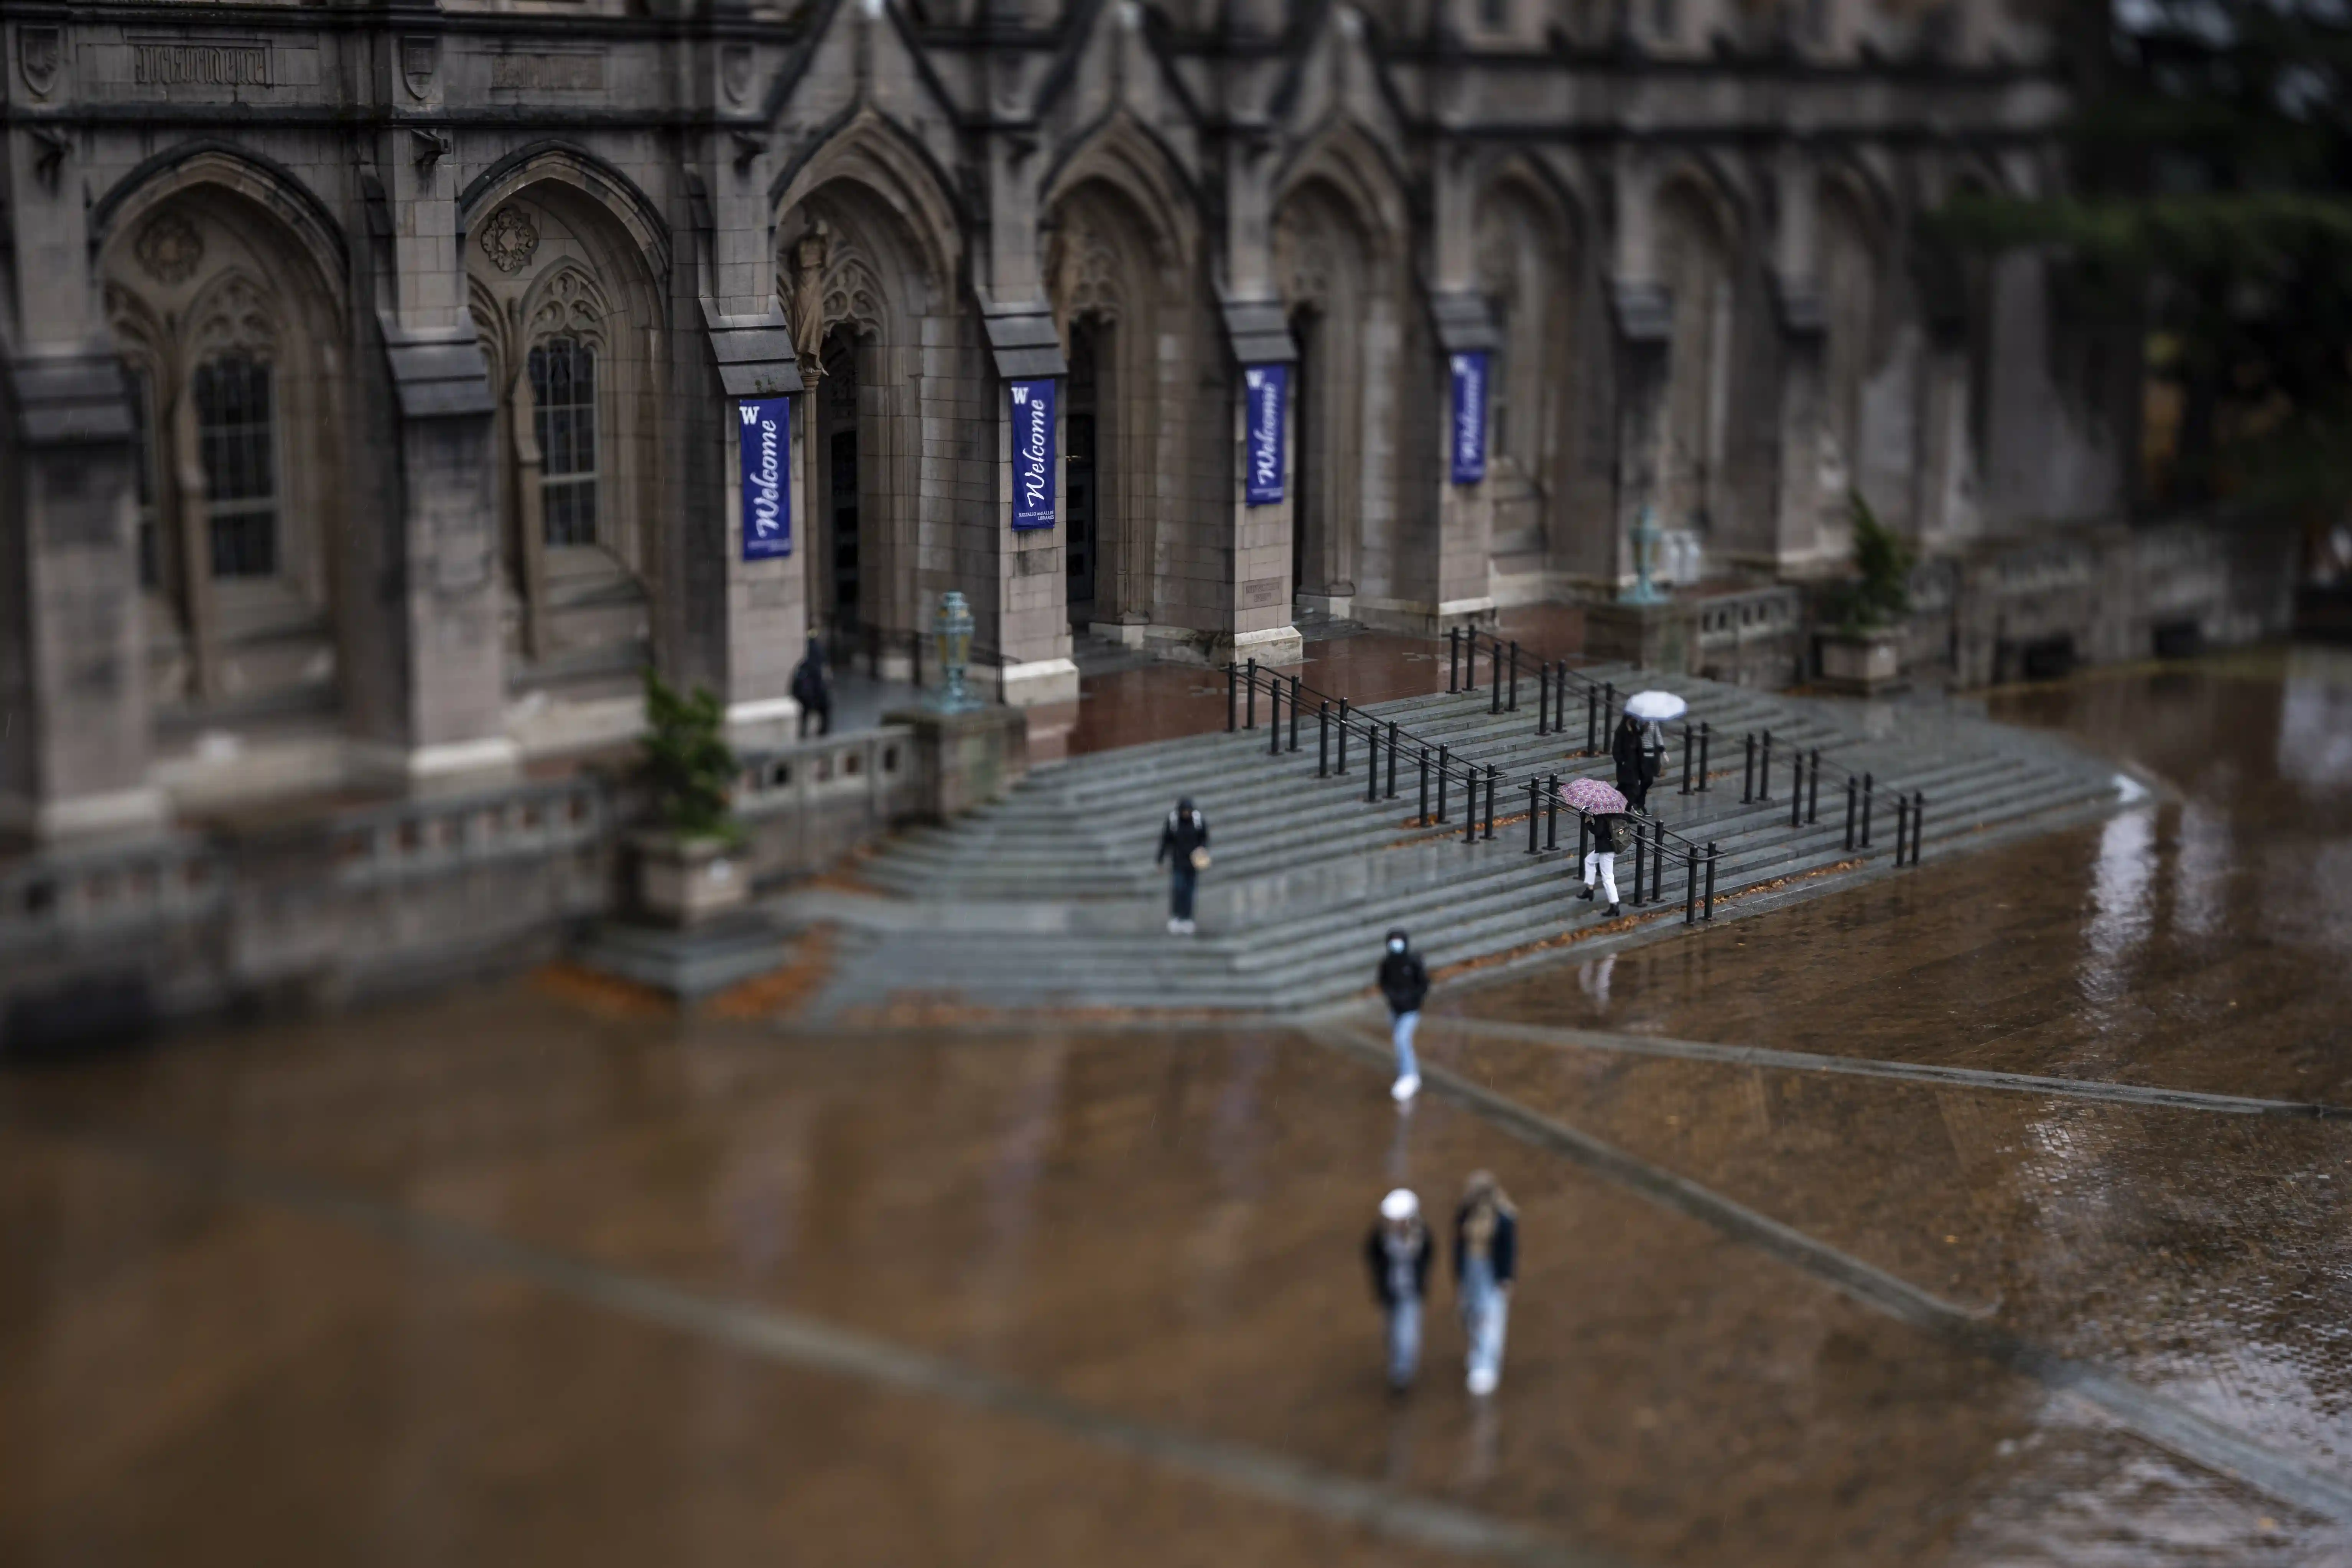 Red Square in the rain